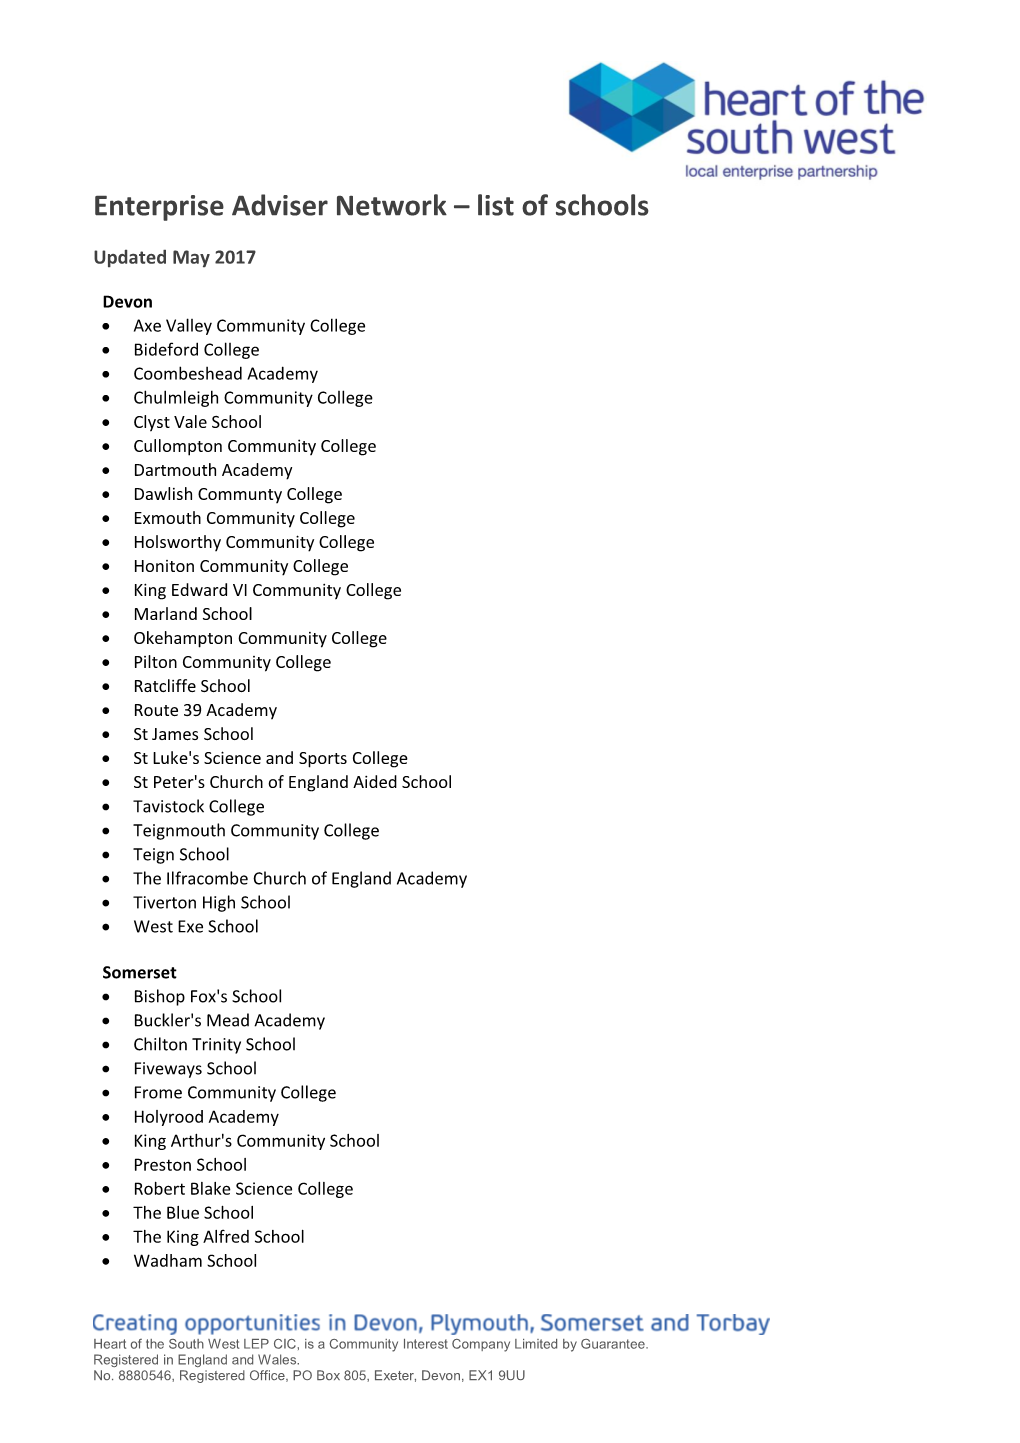 Enterprise Adviser Network – List of Schools